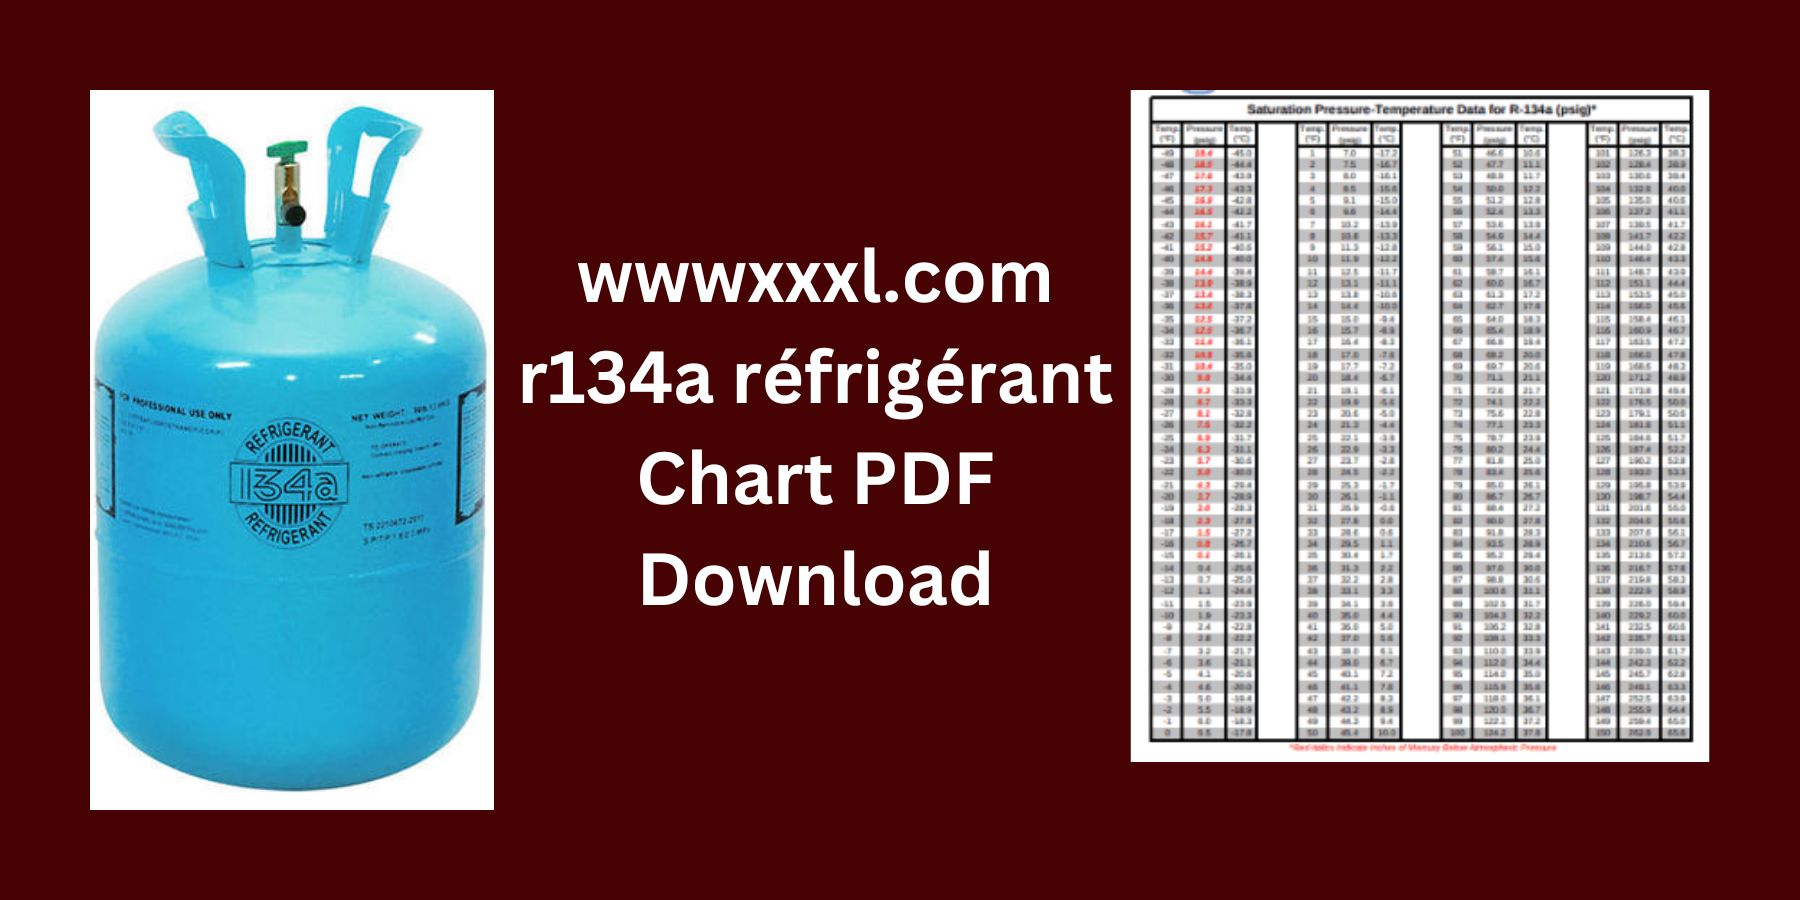 wwwxxxl.com r134a réfrigérant Chart PDF Download